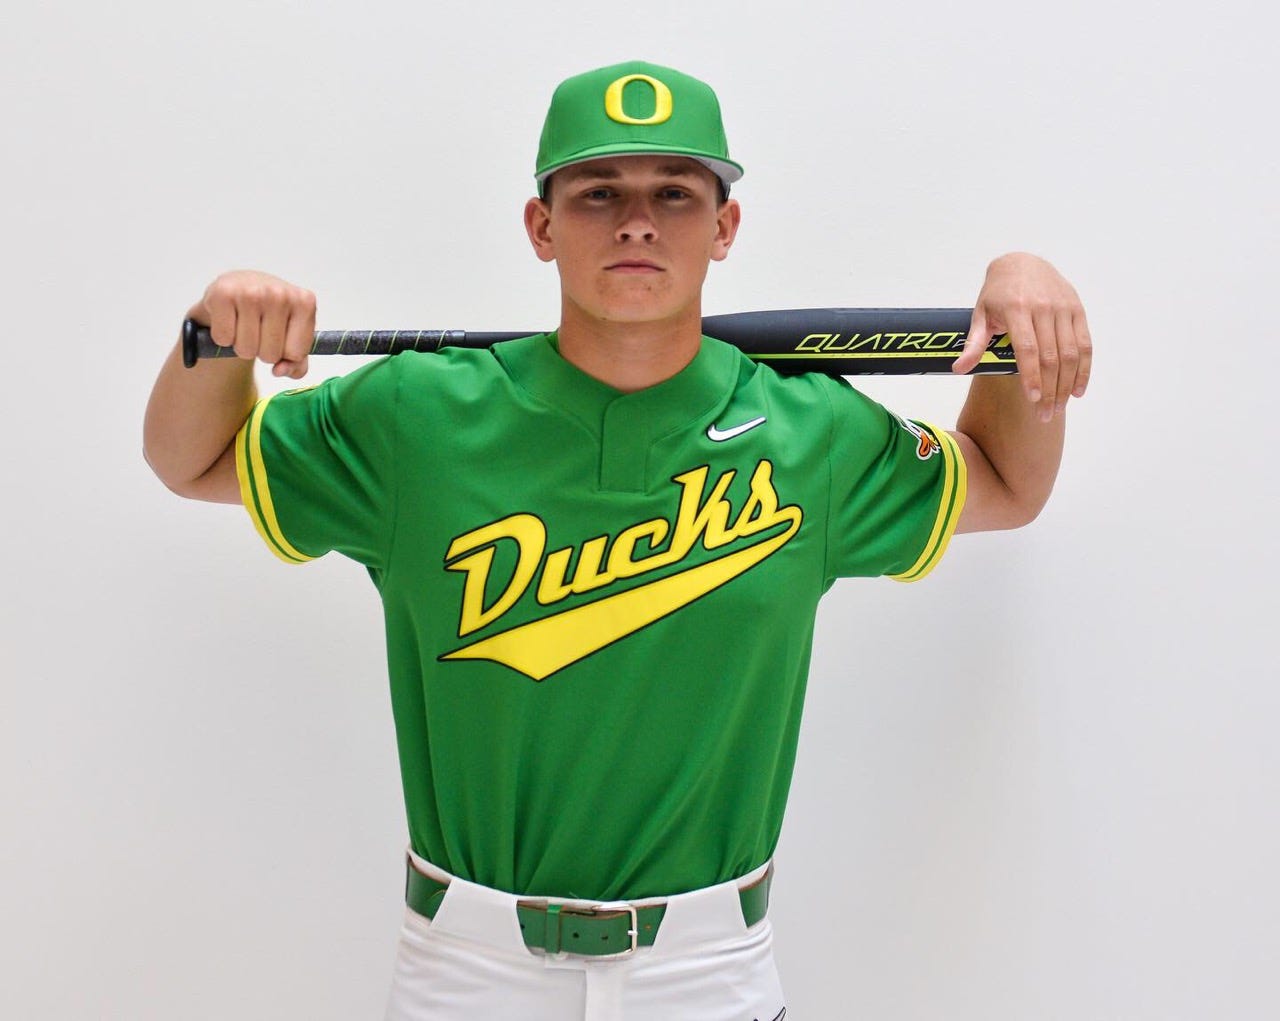 ducks baseball jersey